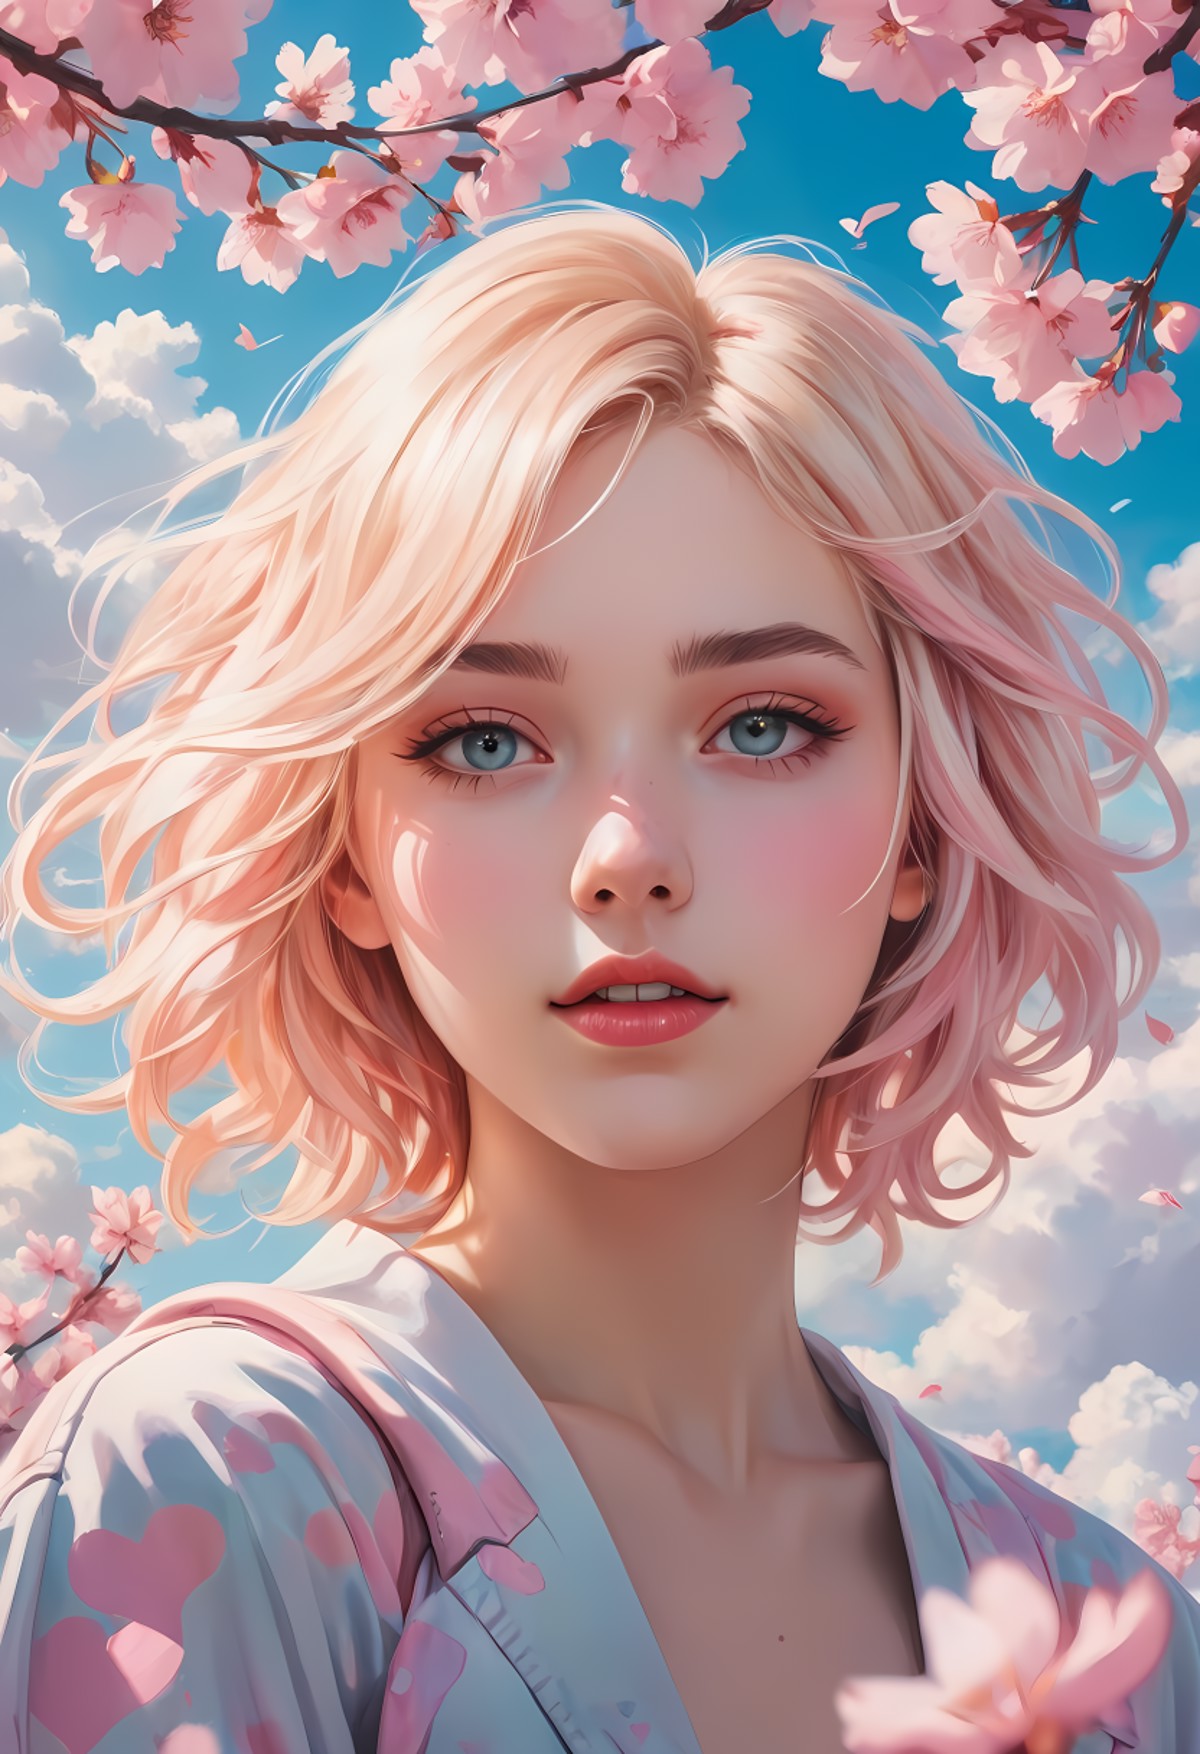 manga style Enchanting beauty of a young woman, adrift amongst heart shaped clouds, reminiscent of photorealistic urban sc...